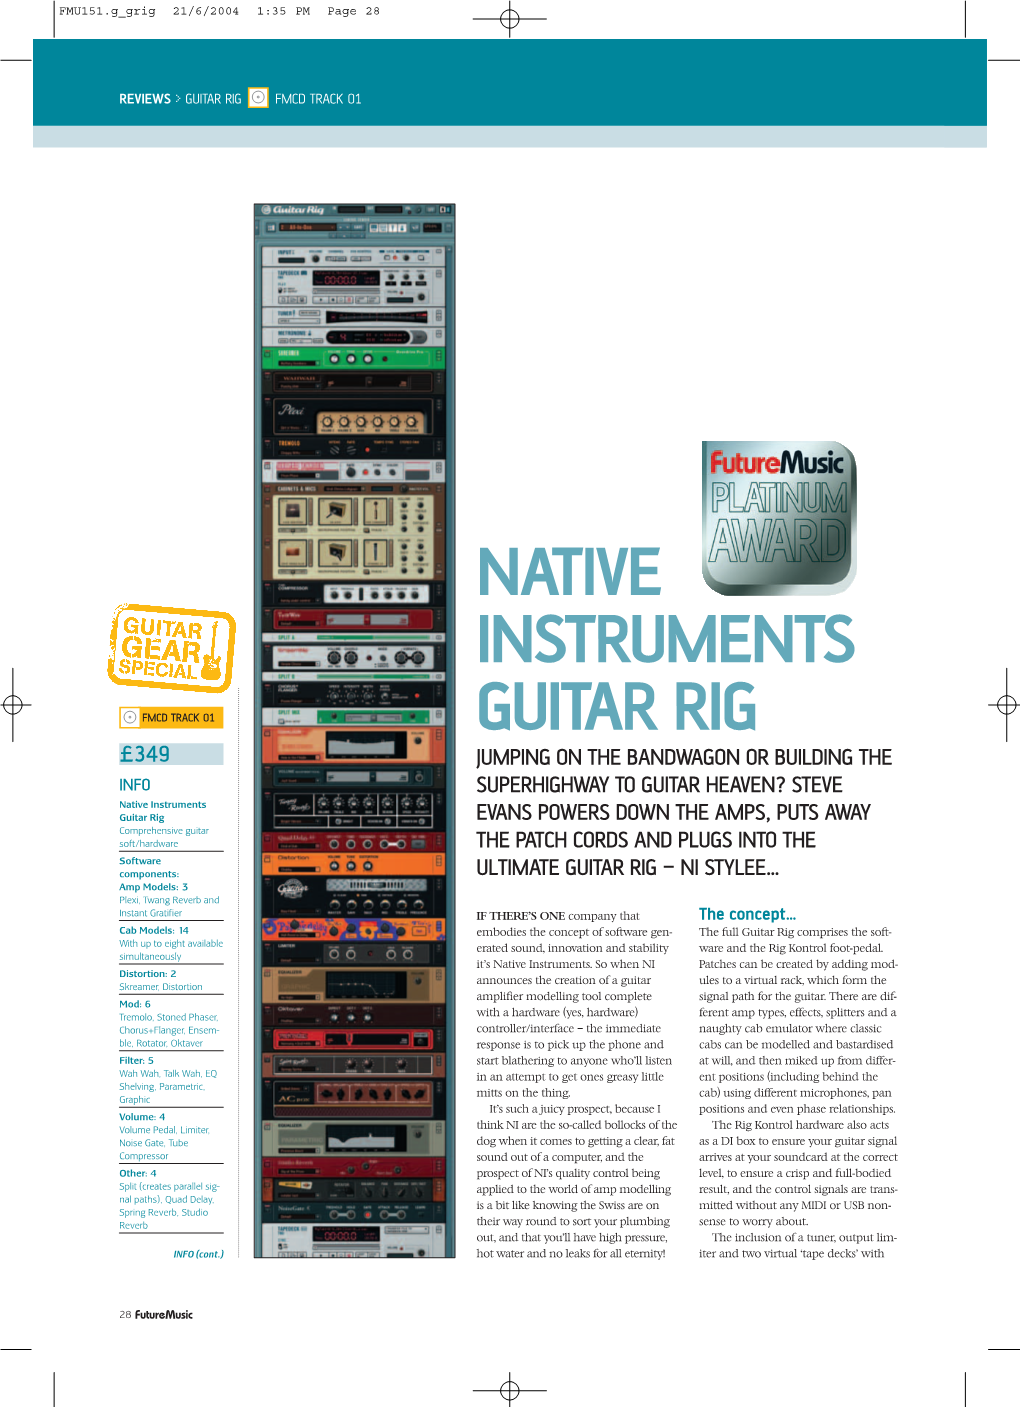 Native Instruments Guitar